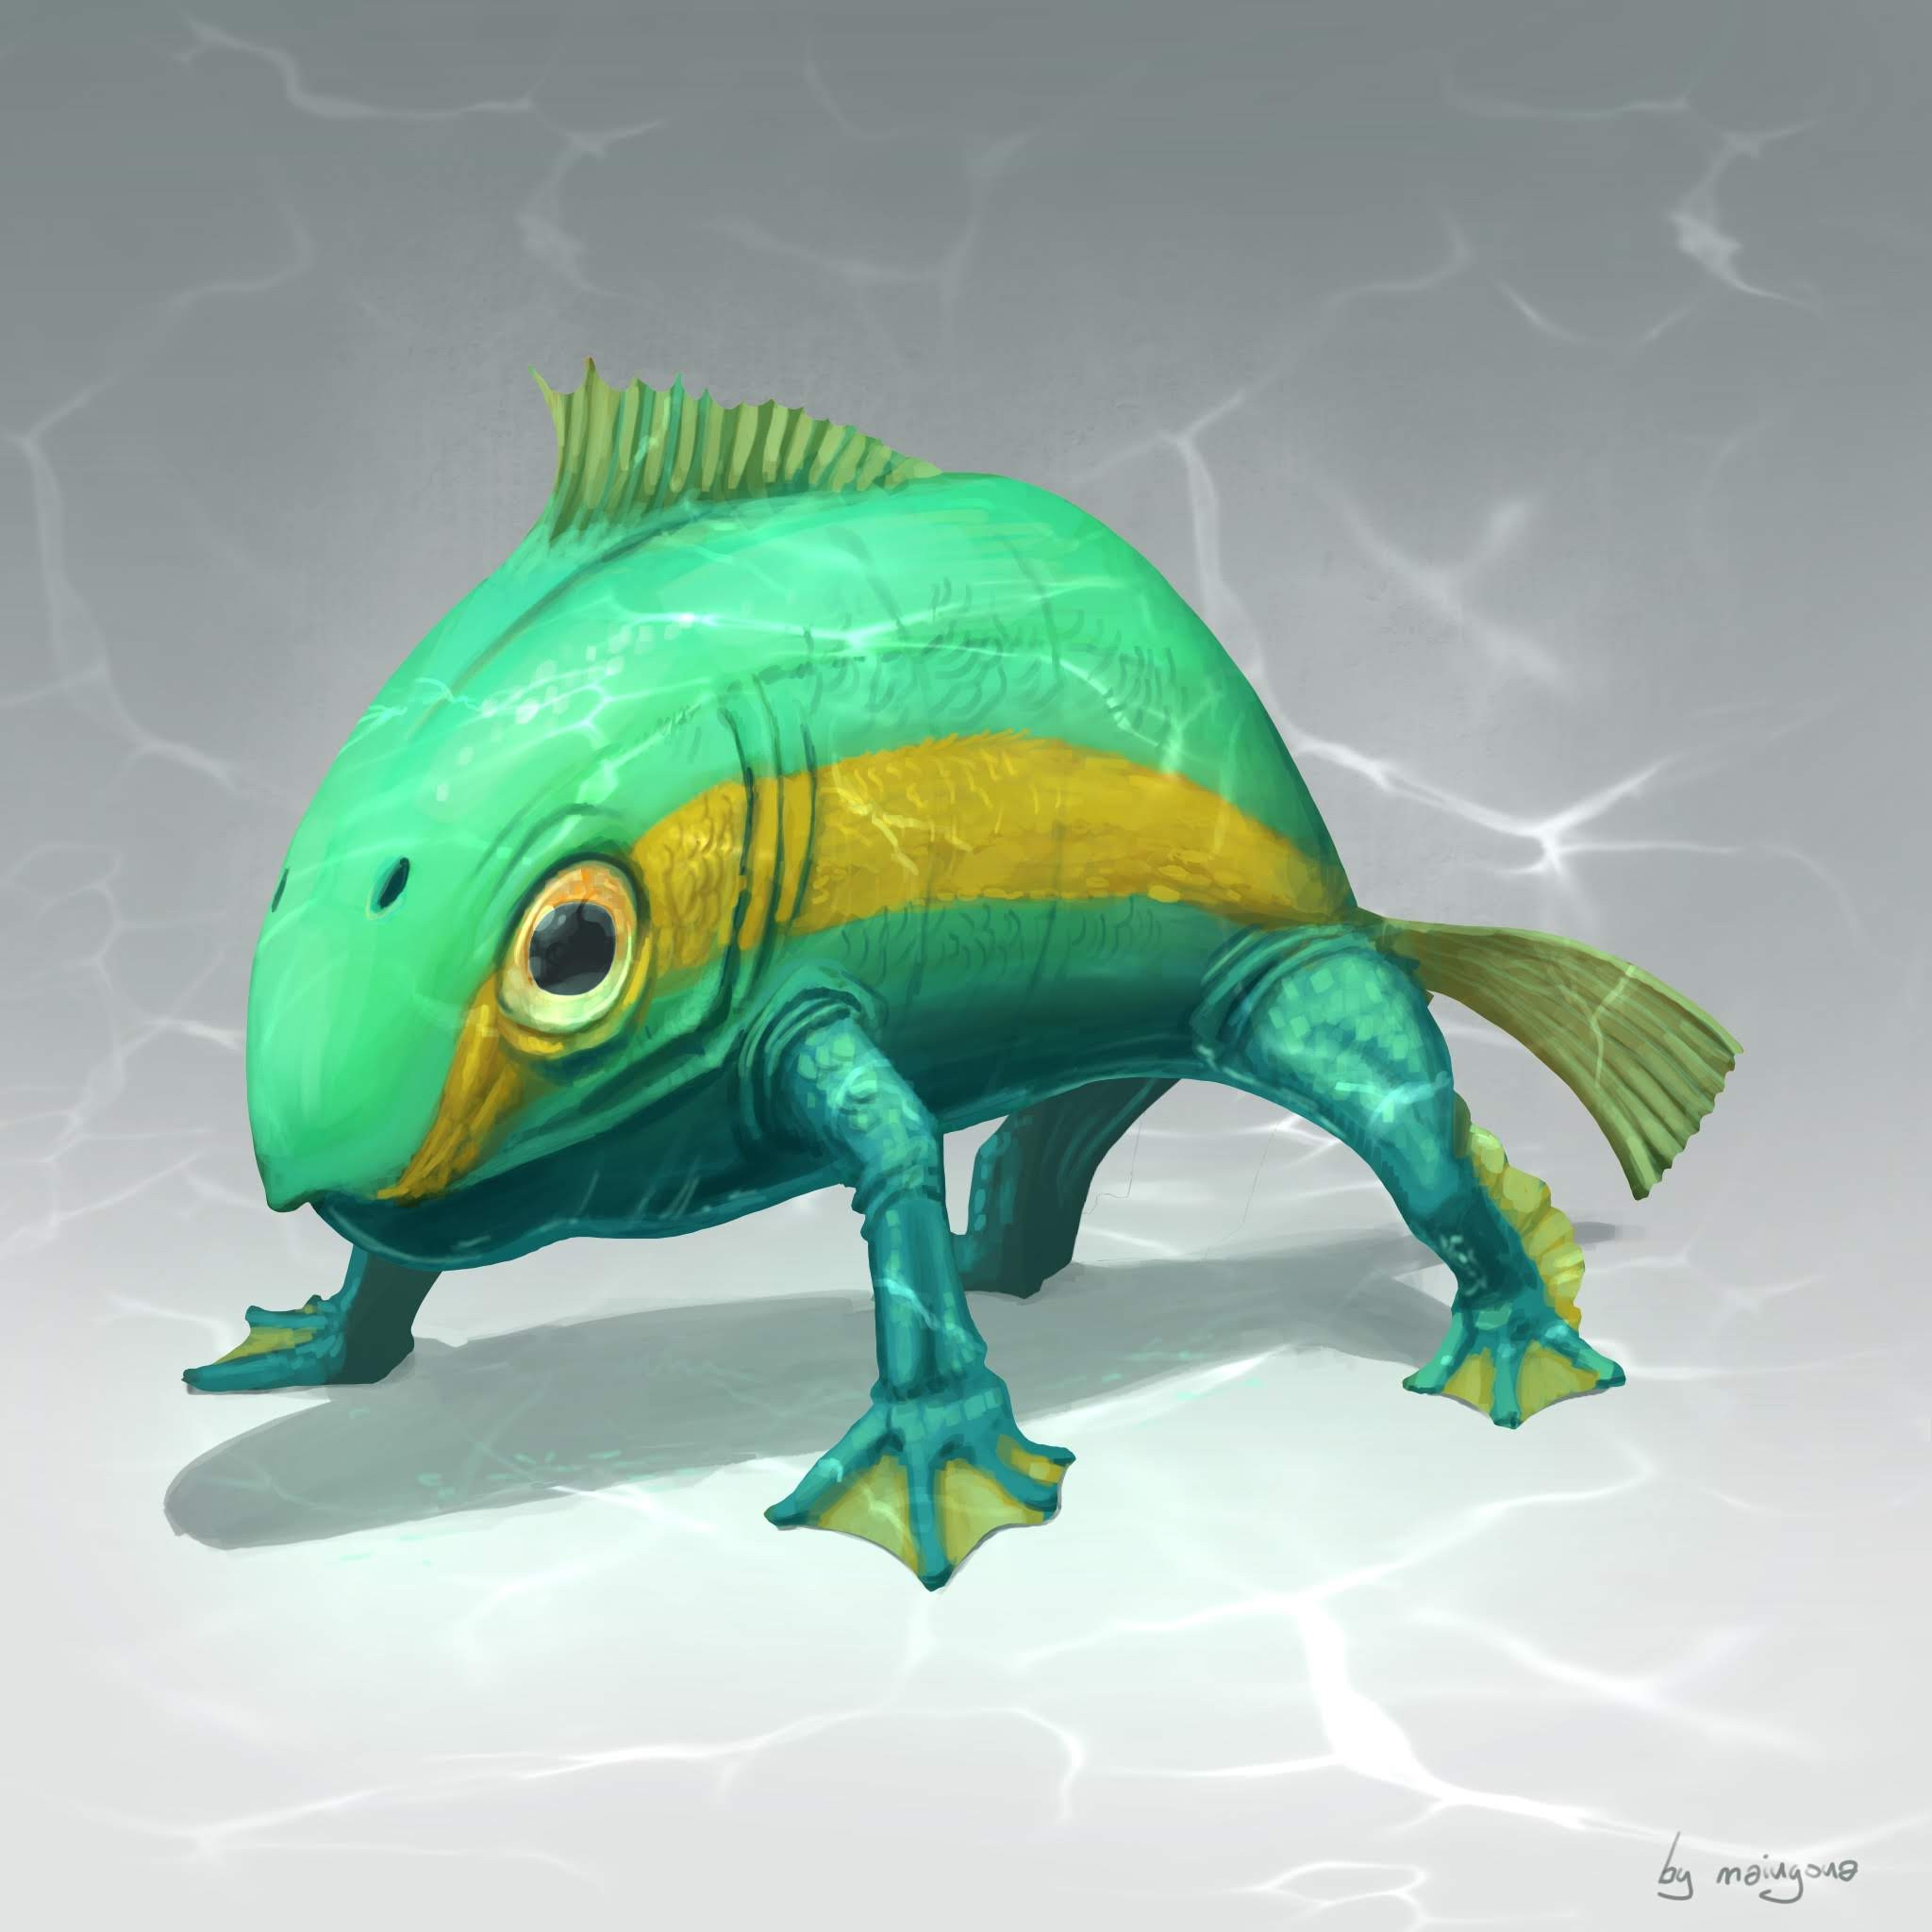 The leggyfish concept